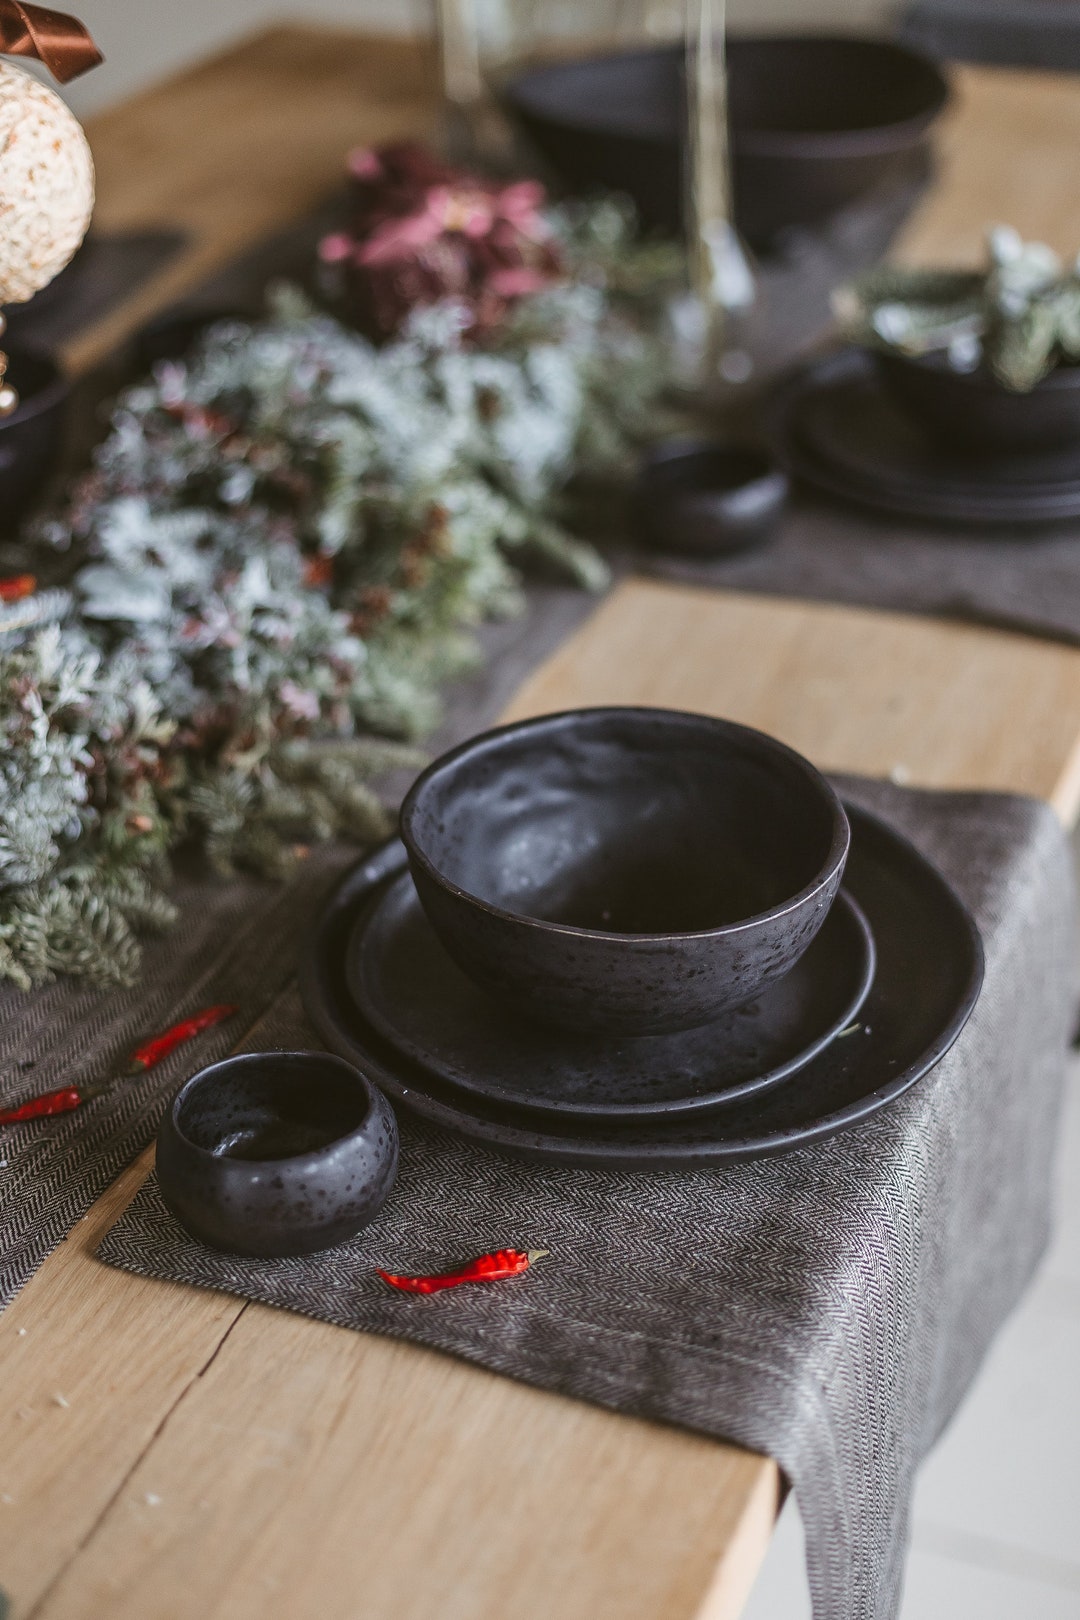 Hyacinth 4-Piece Black Dinnerware Set with Soup Bowl with Reactive Glaze